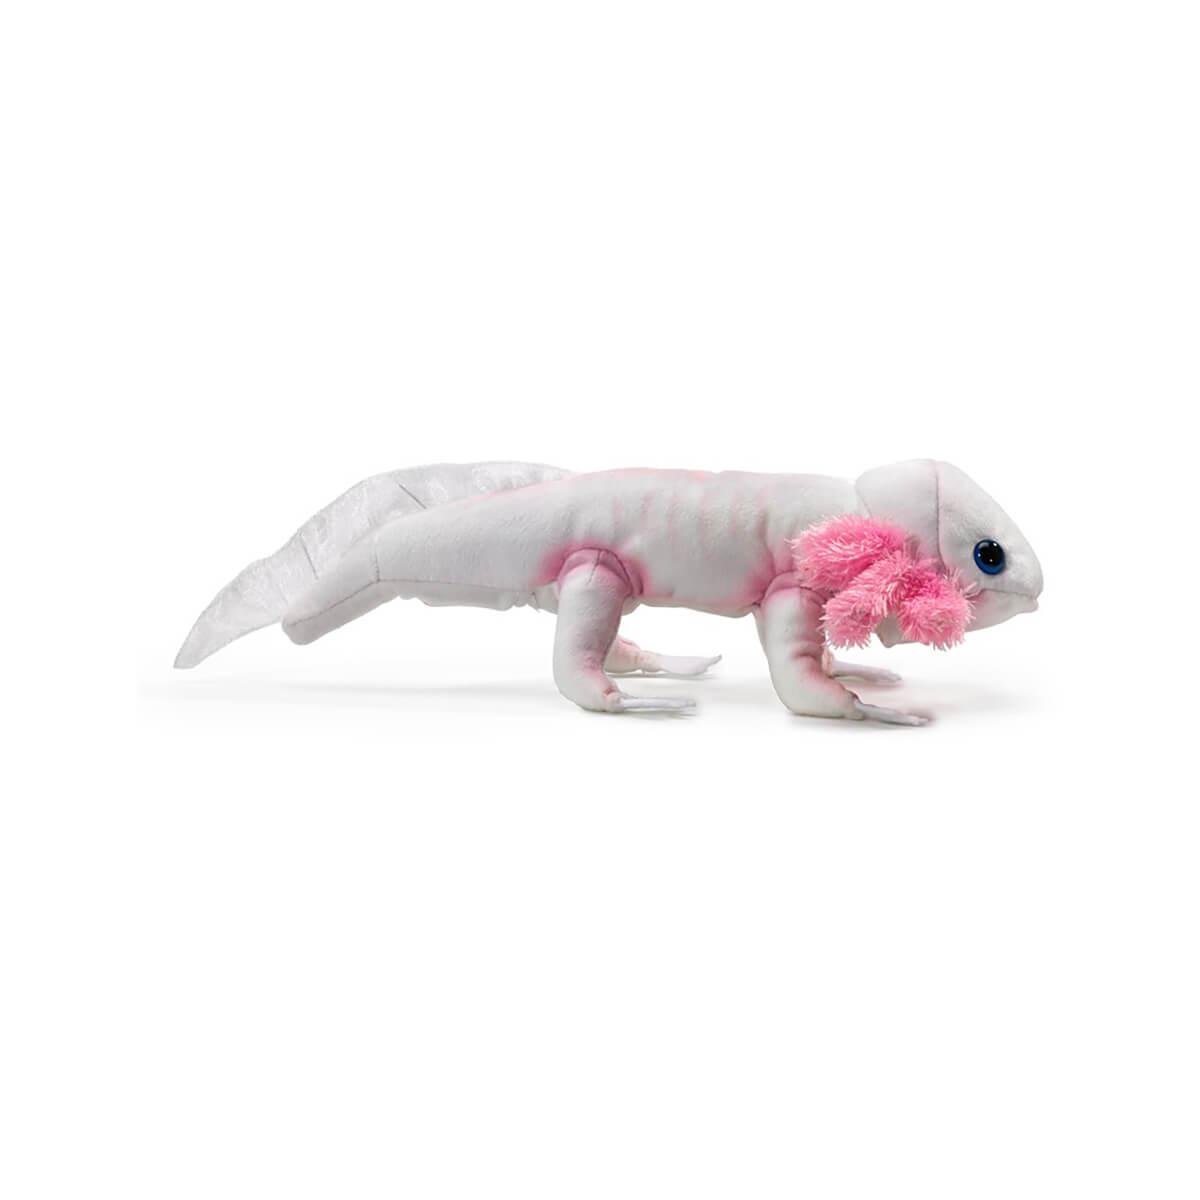 axolotl plush